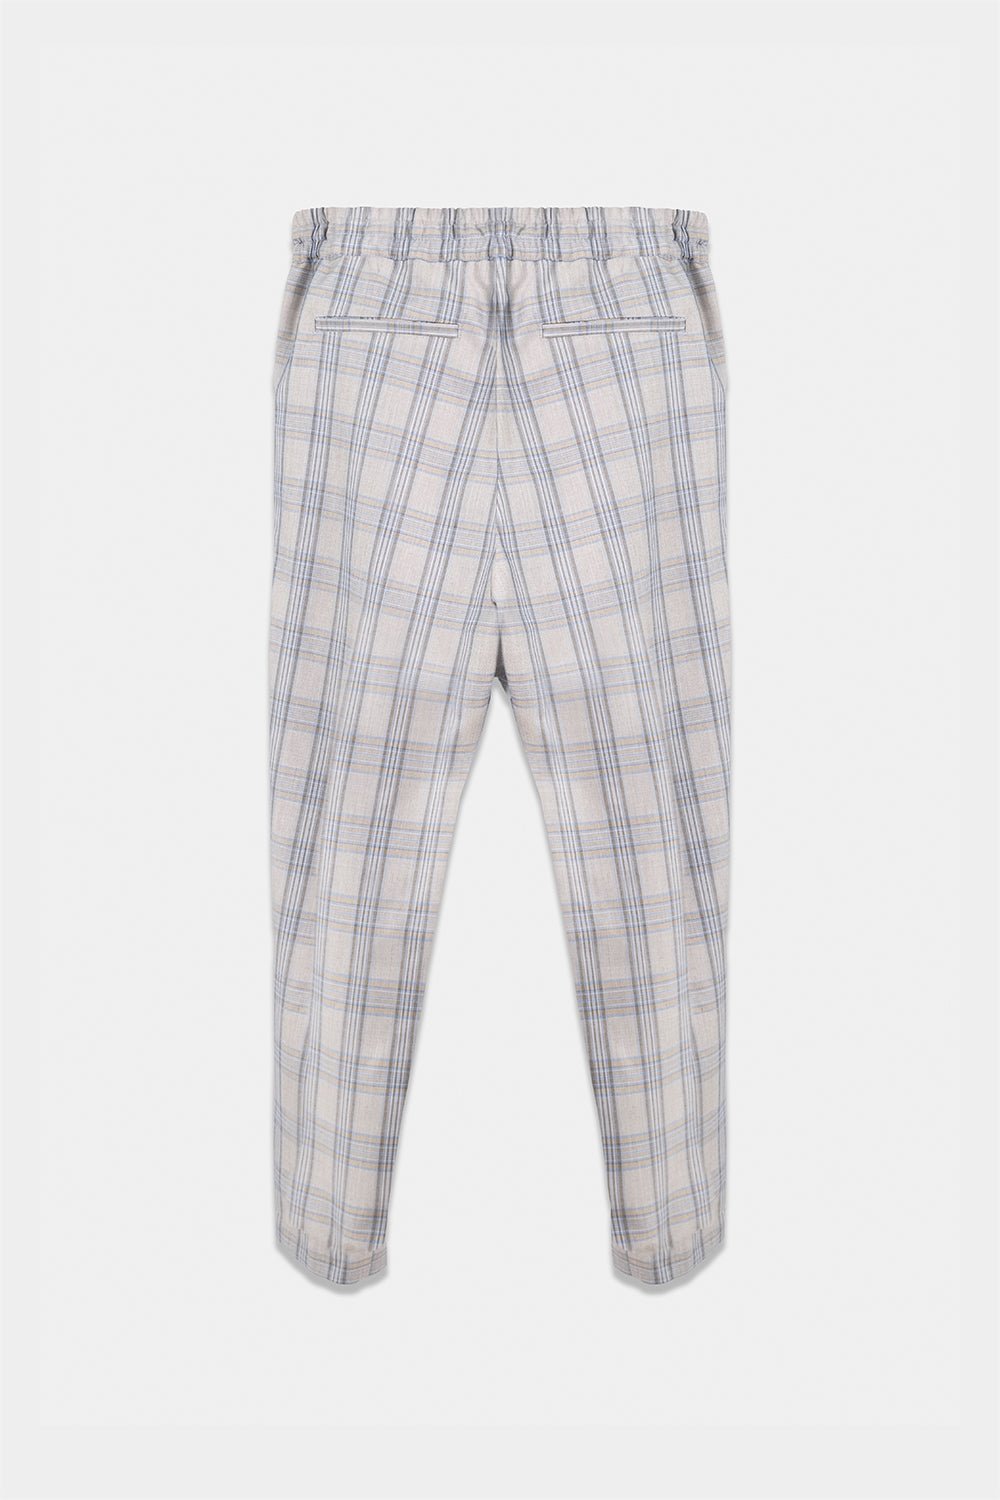 SEANNUNG - MEN - Plaid Trousers with Elastic Waist 格紋鬆緊西裝窄褲